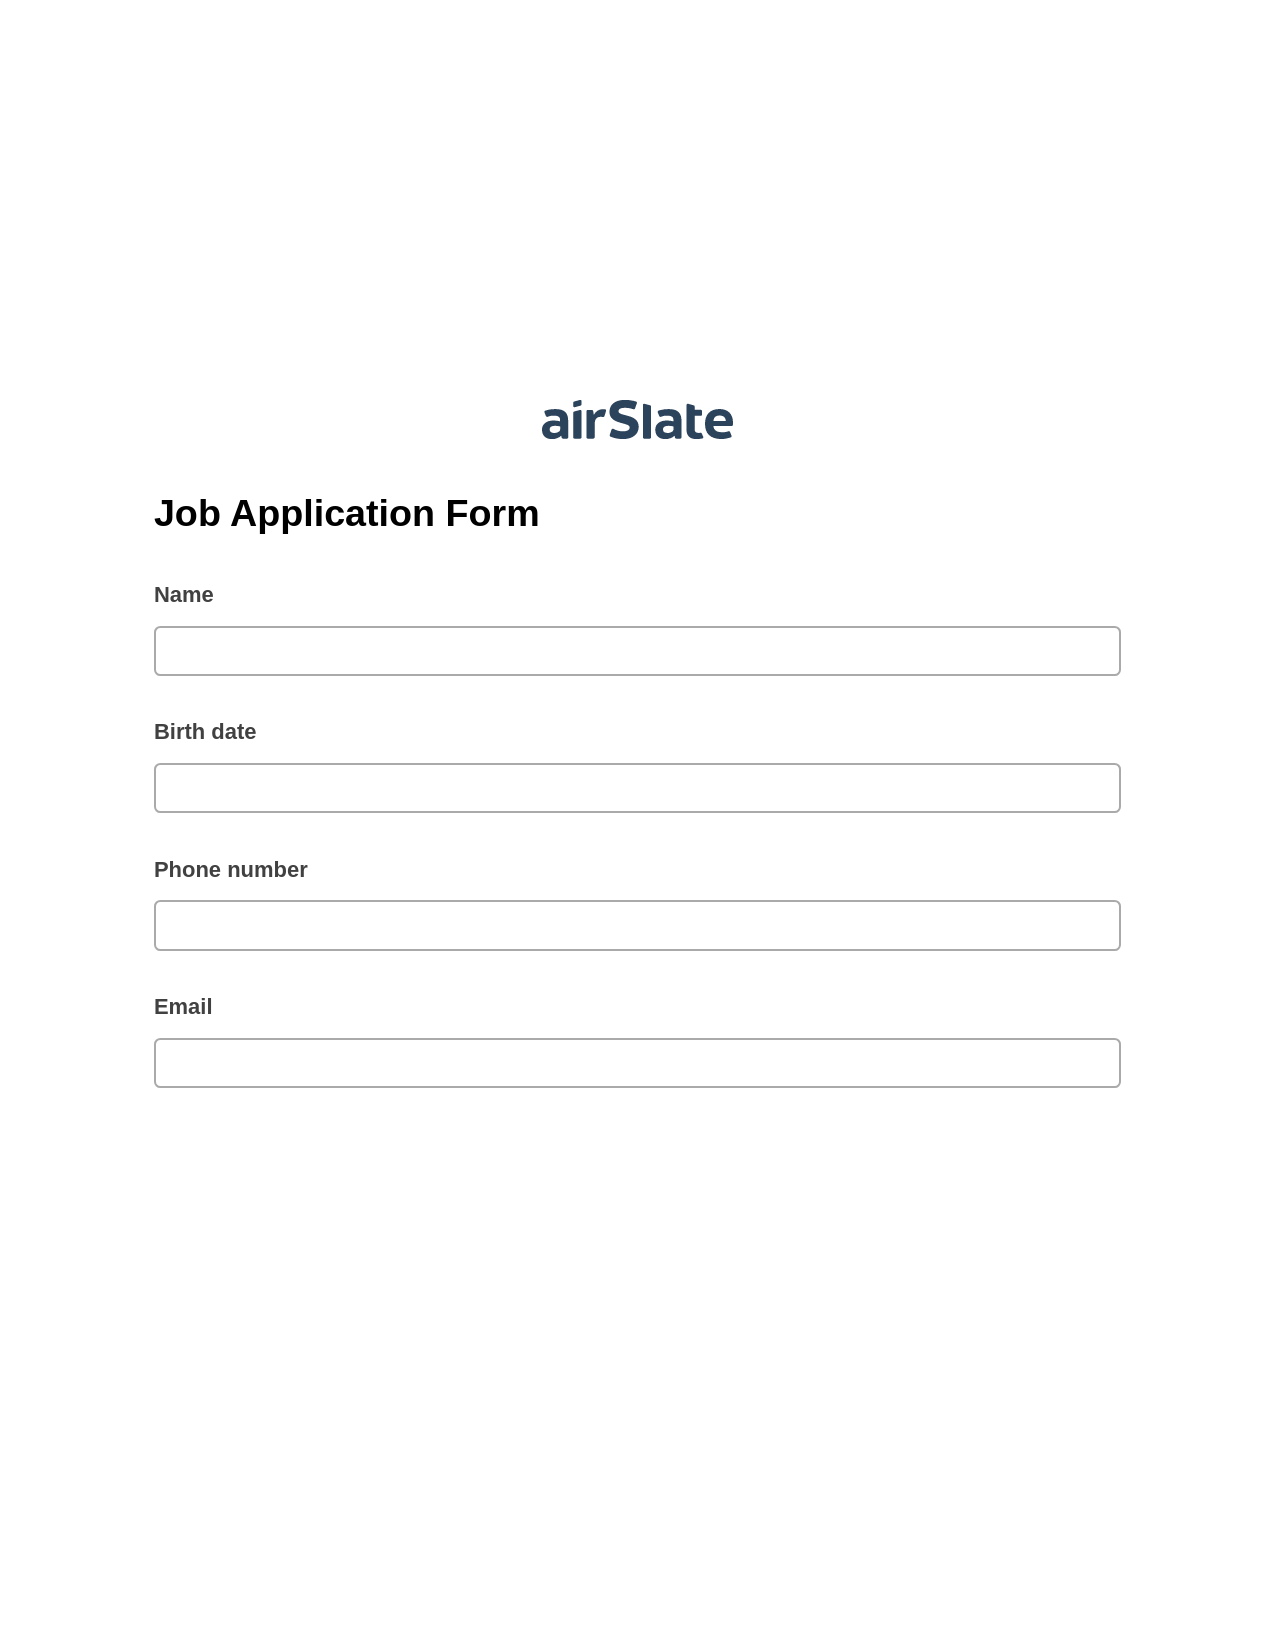 Job Application Form Pre-fill from MySQL Dropdown Options Bot, Create MS Dynamics 365 Records Bot, Post-finish Document Bot